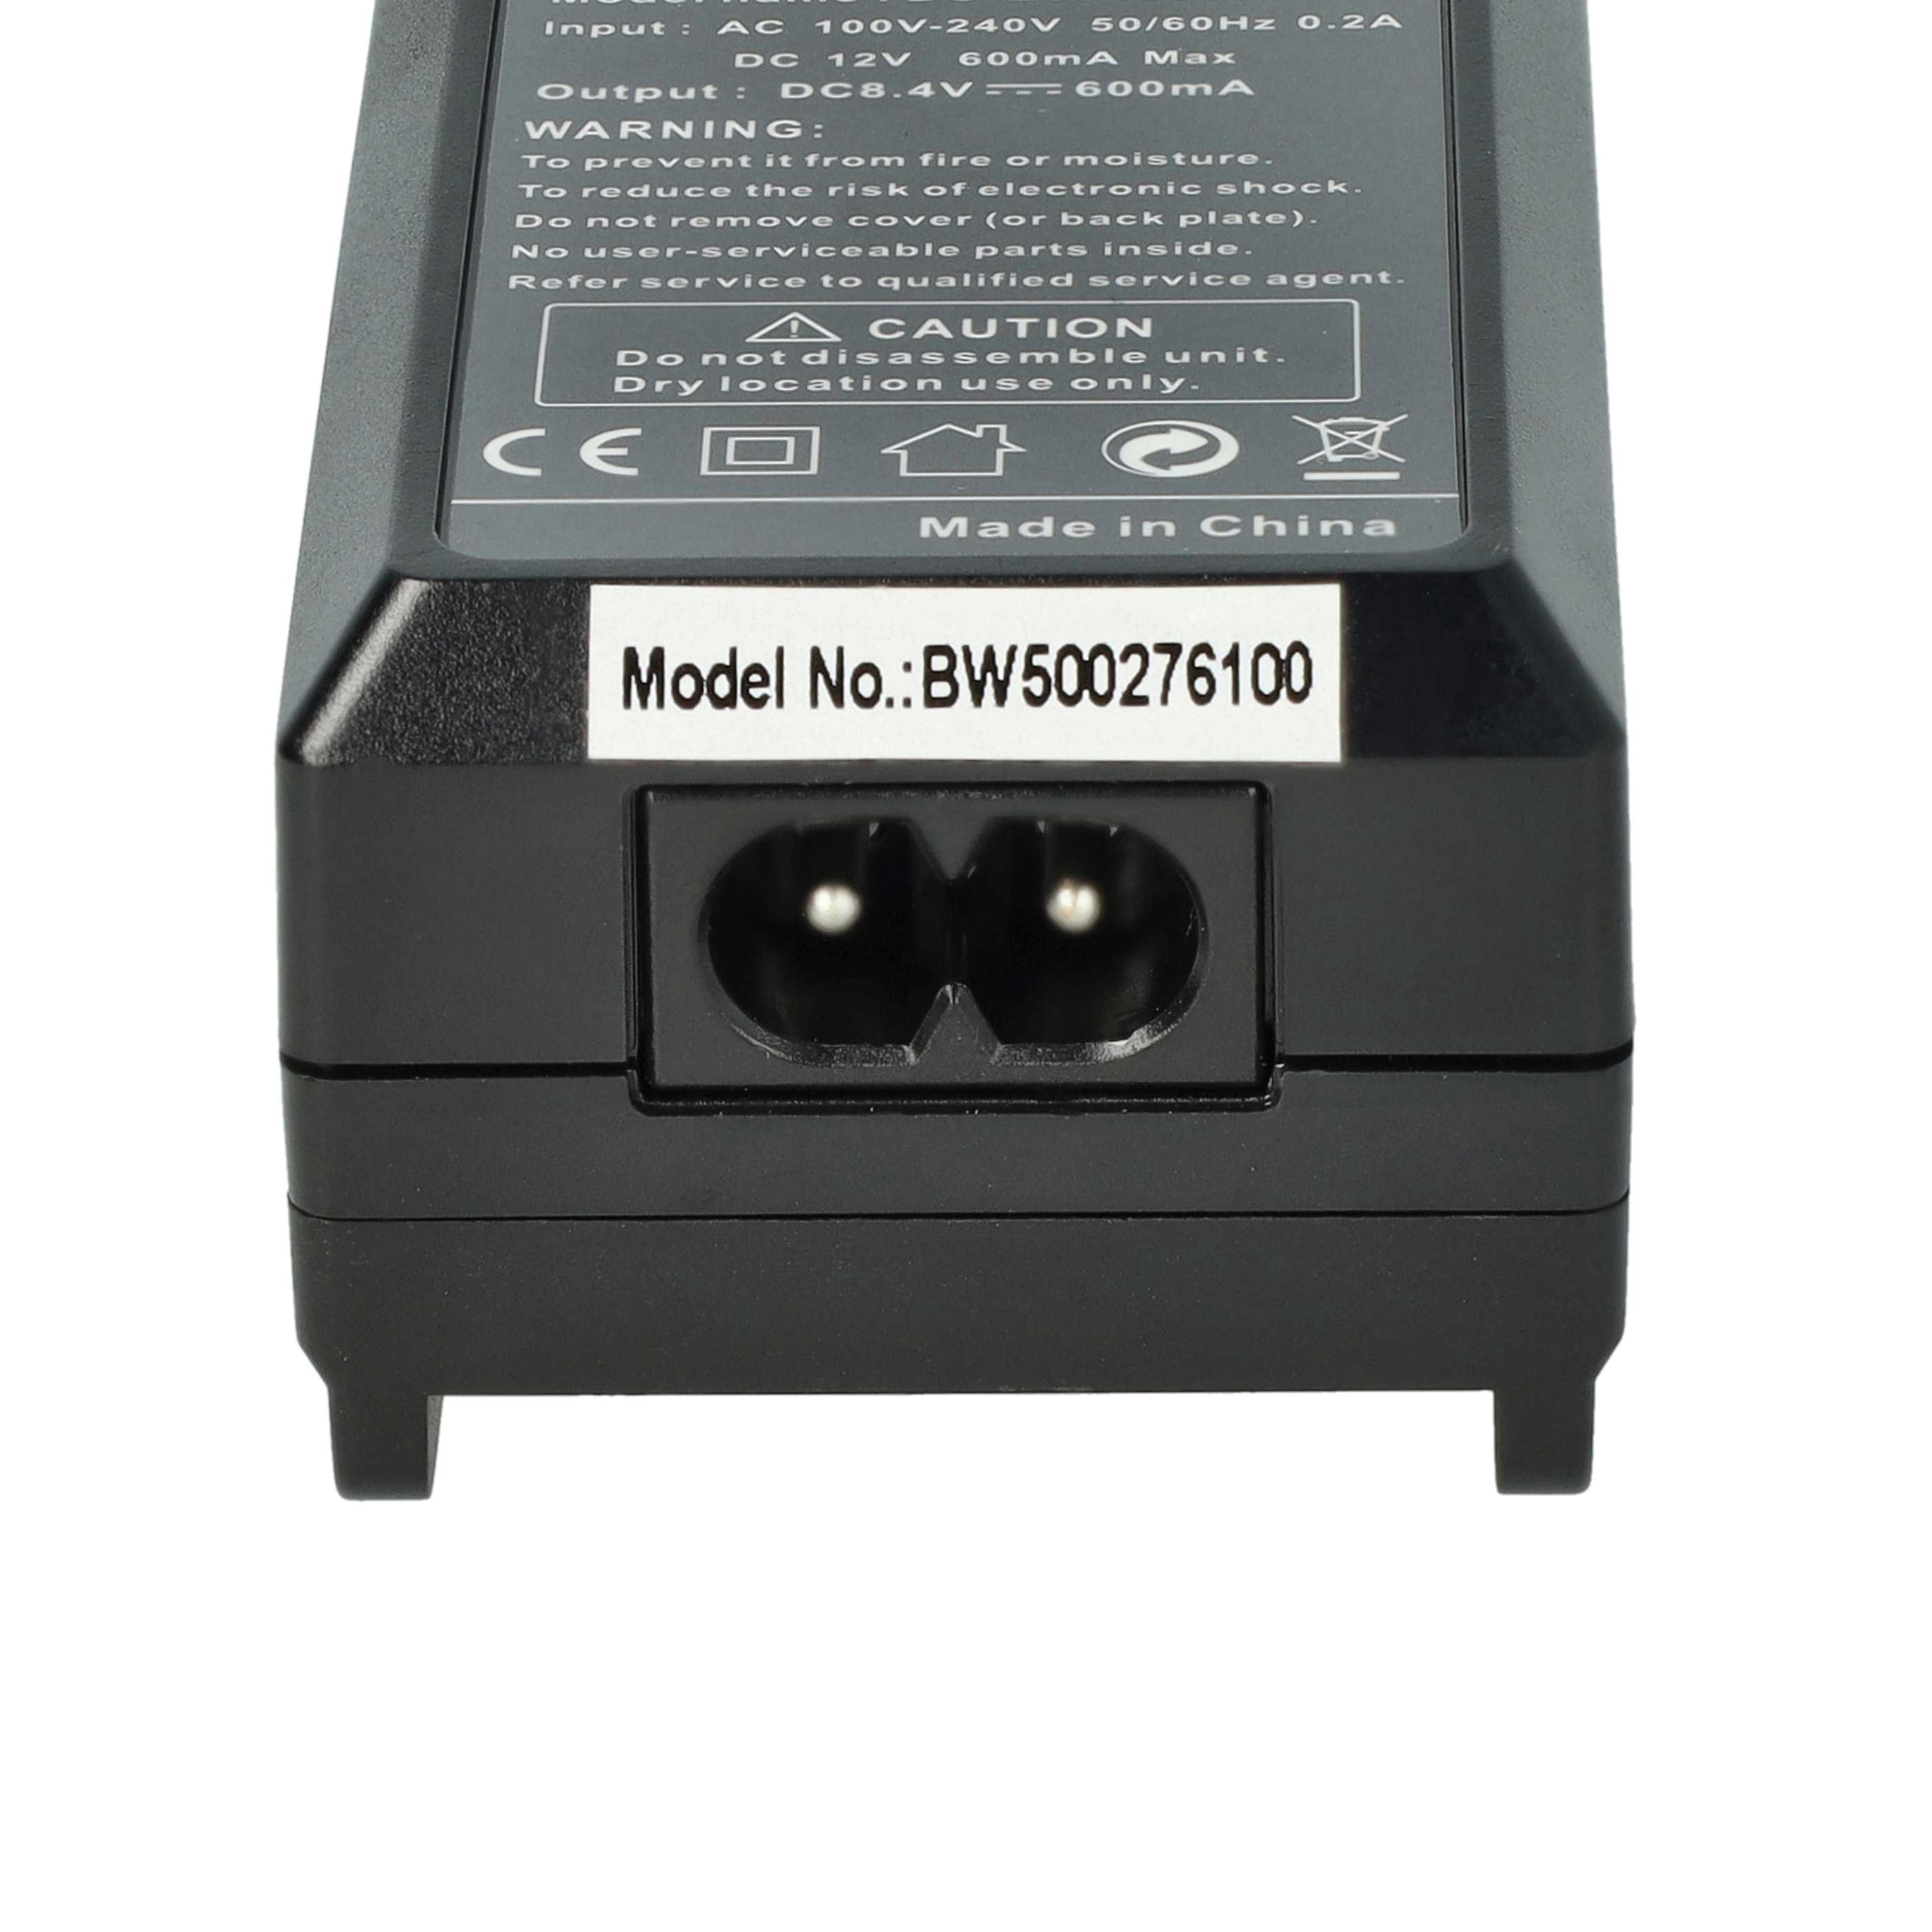 Battery Charger suitable for GR-D239 Camera etc. - 0.6 A, 8.4 V